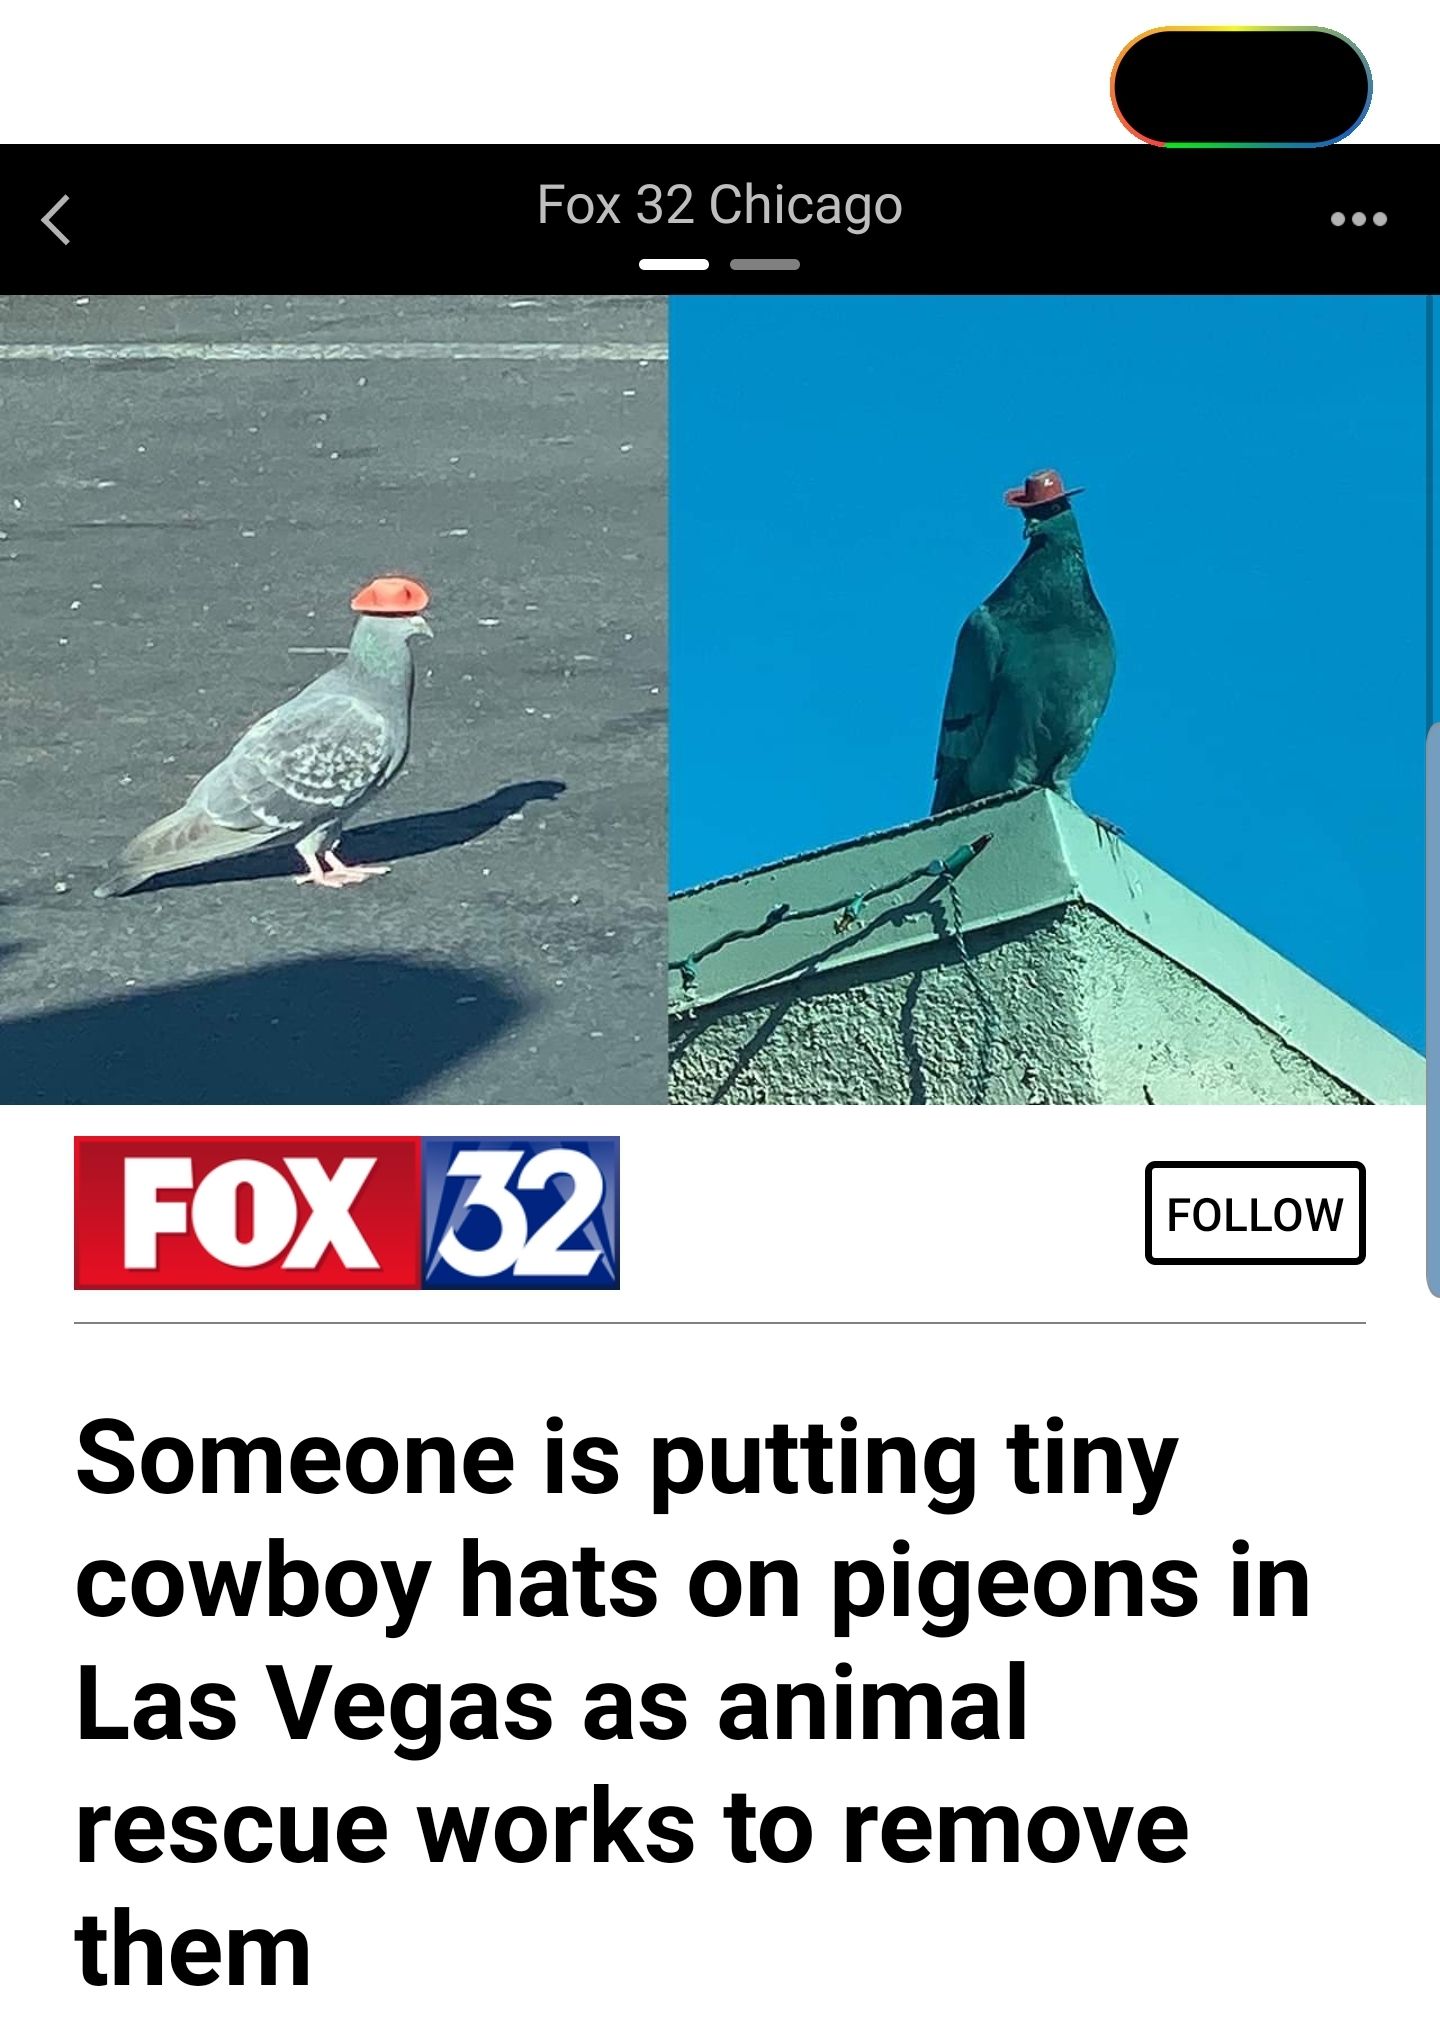 Pigeons with little cowboyhats